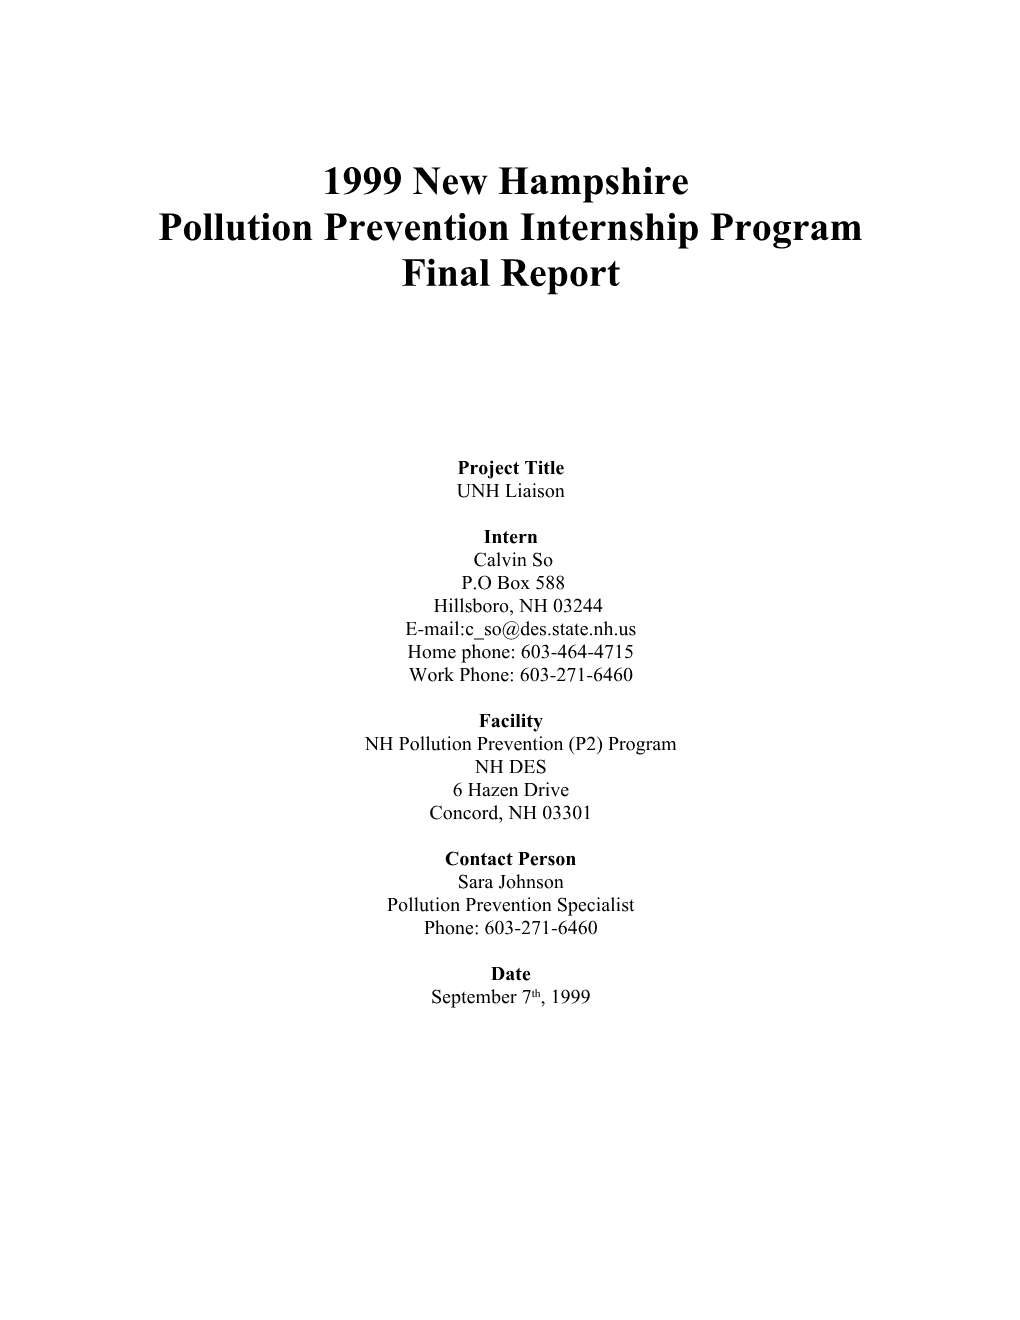 Pollution Prevention Internship Program Final Report